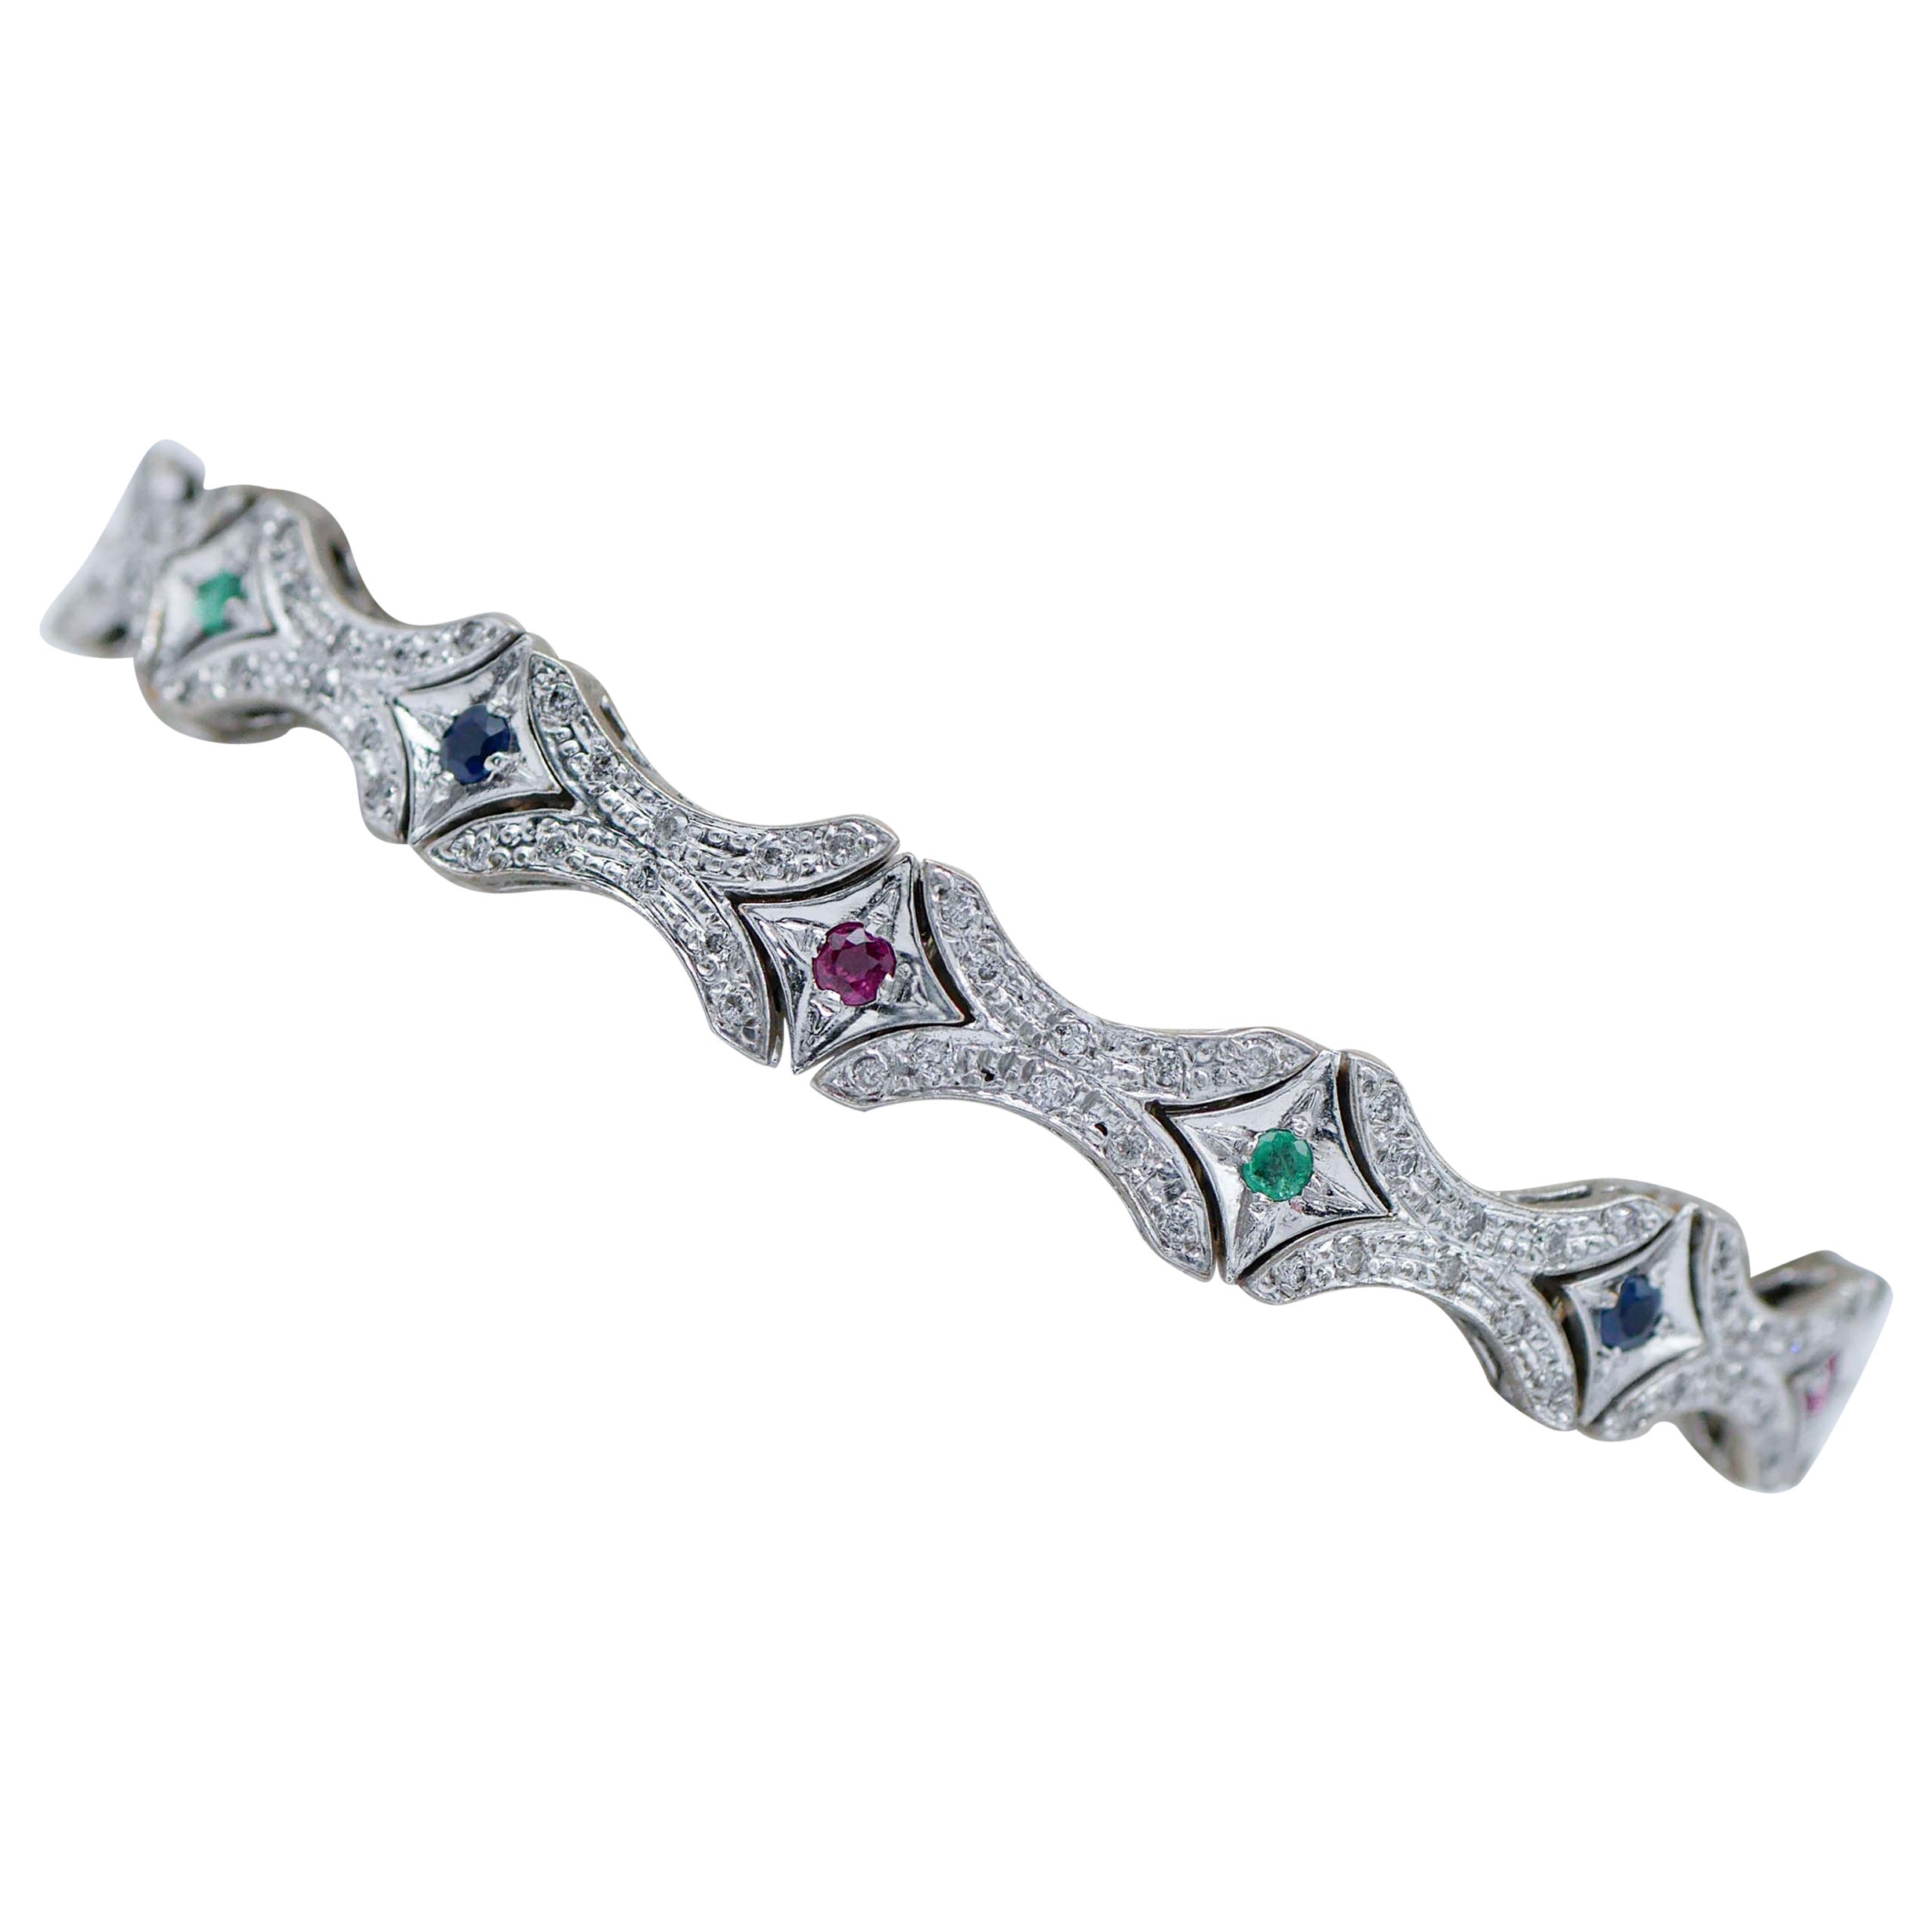 Emeralds, Rubies, Sapphires, Diamonds, 12 Karat White Gold Bracelet.